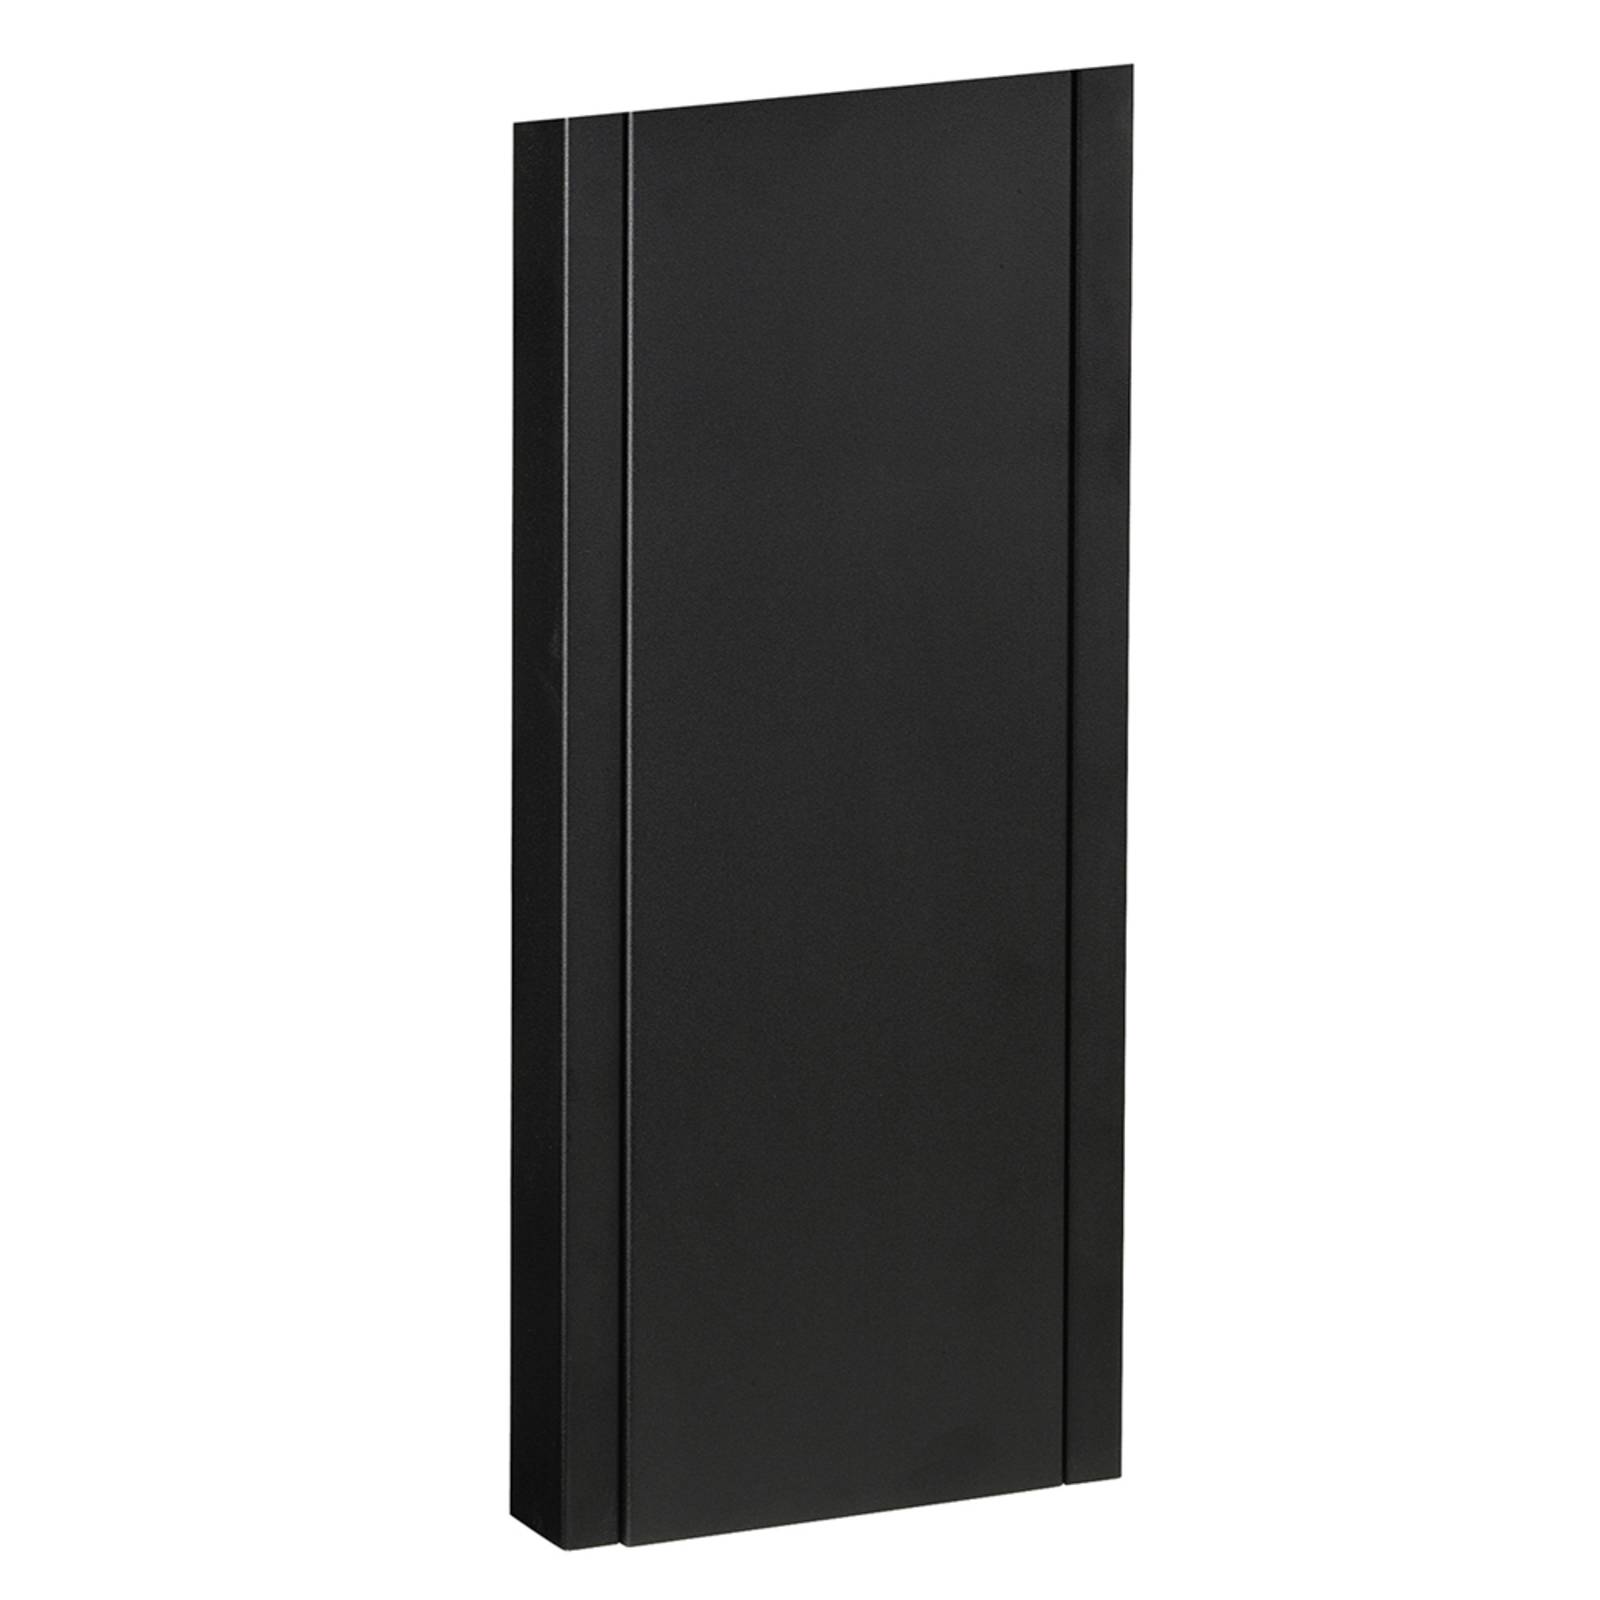 Elegant letterbox stand 1001 black